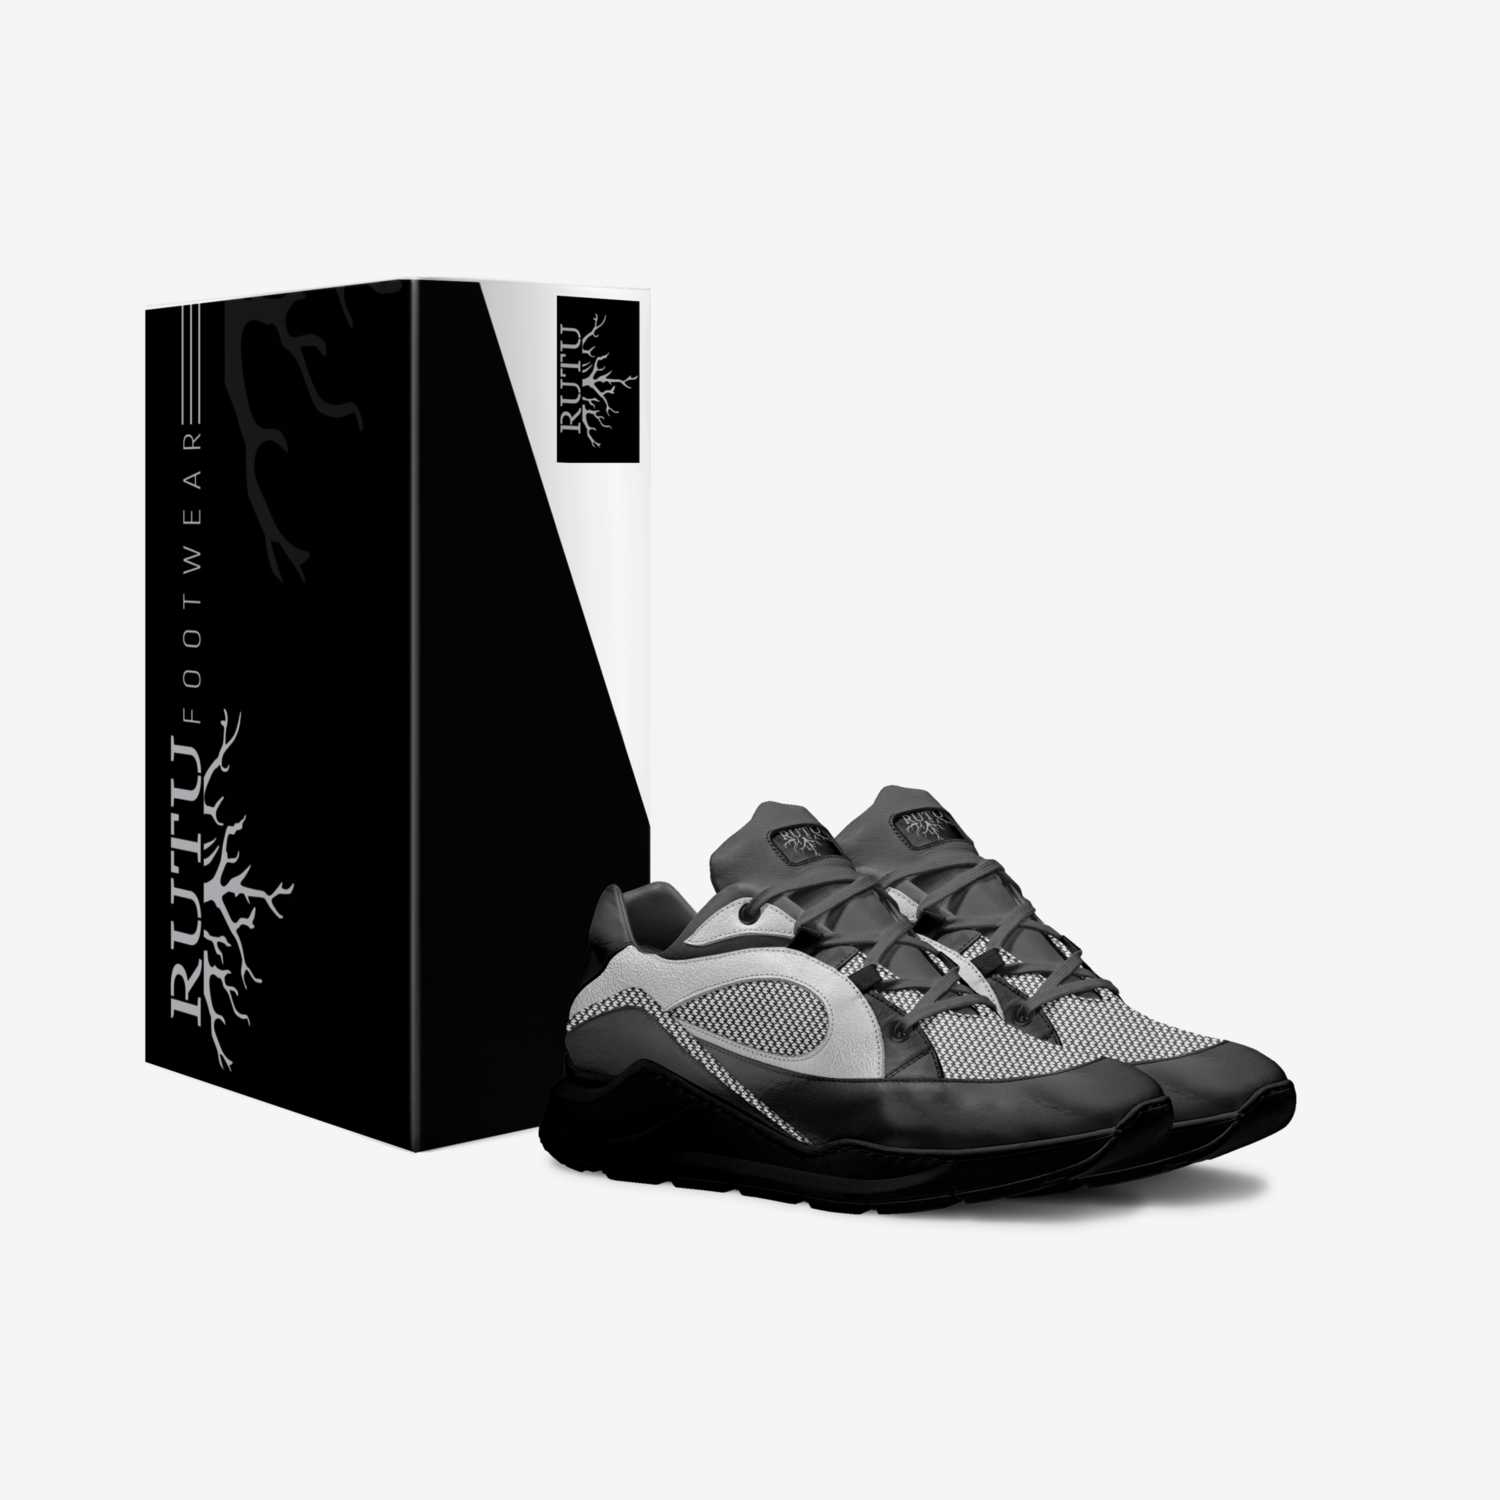 Bigi Pat custom made in Italy shoes by Jordi Delchot | Box view